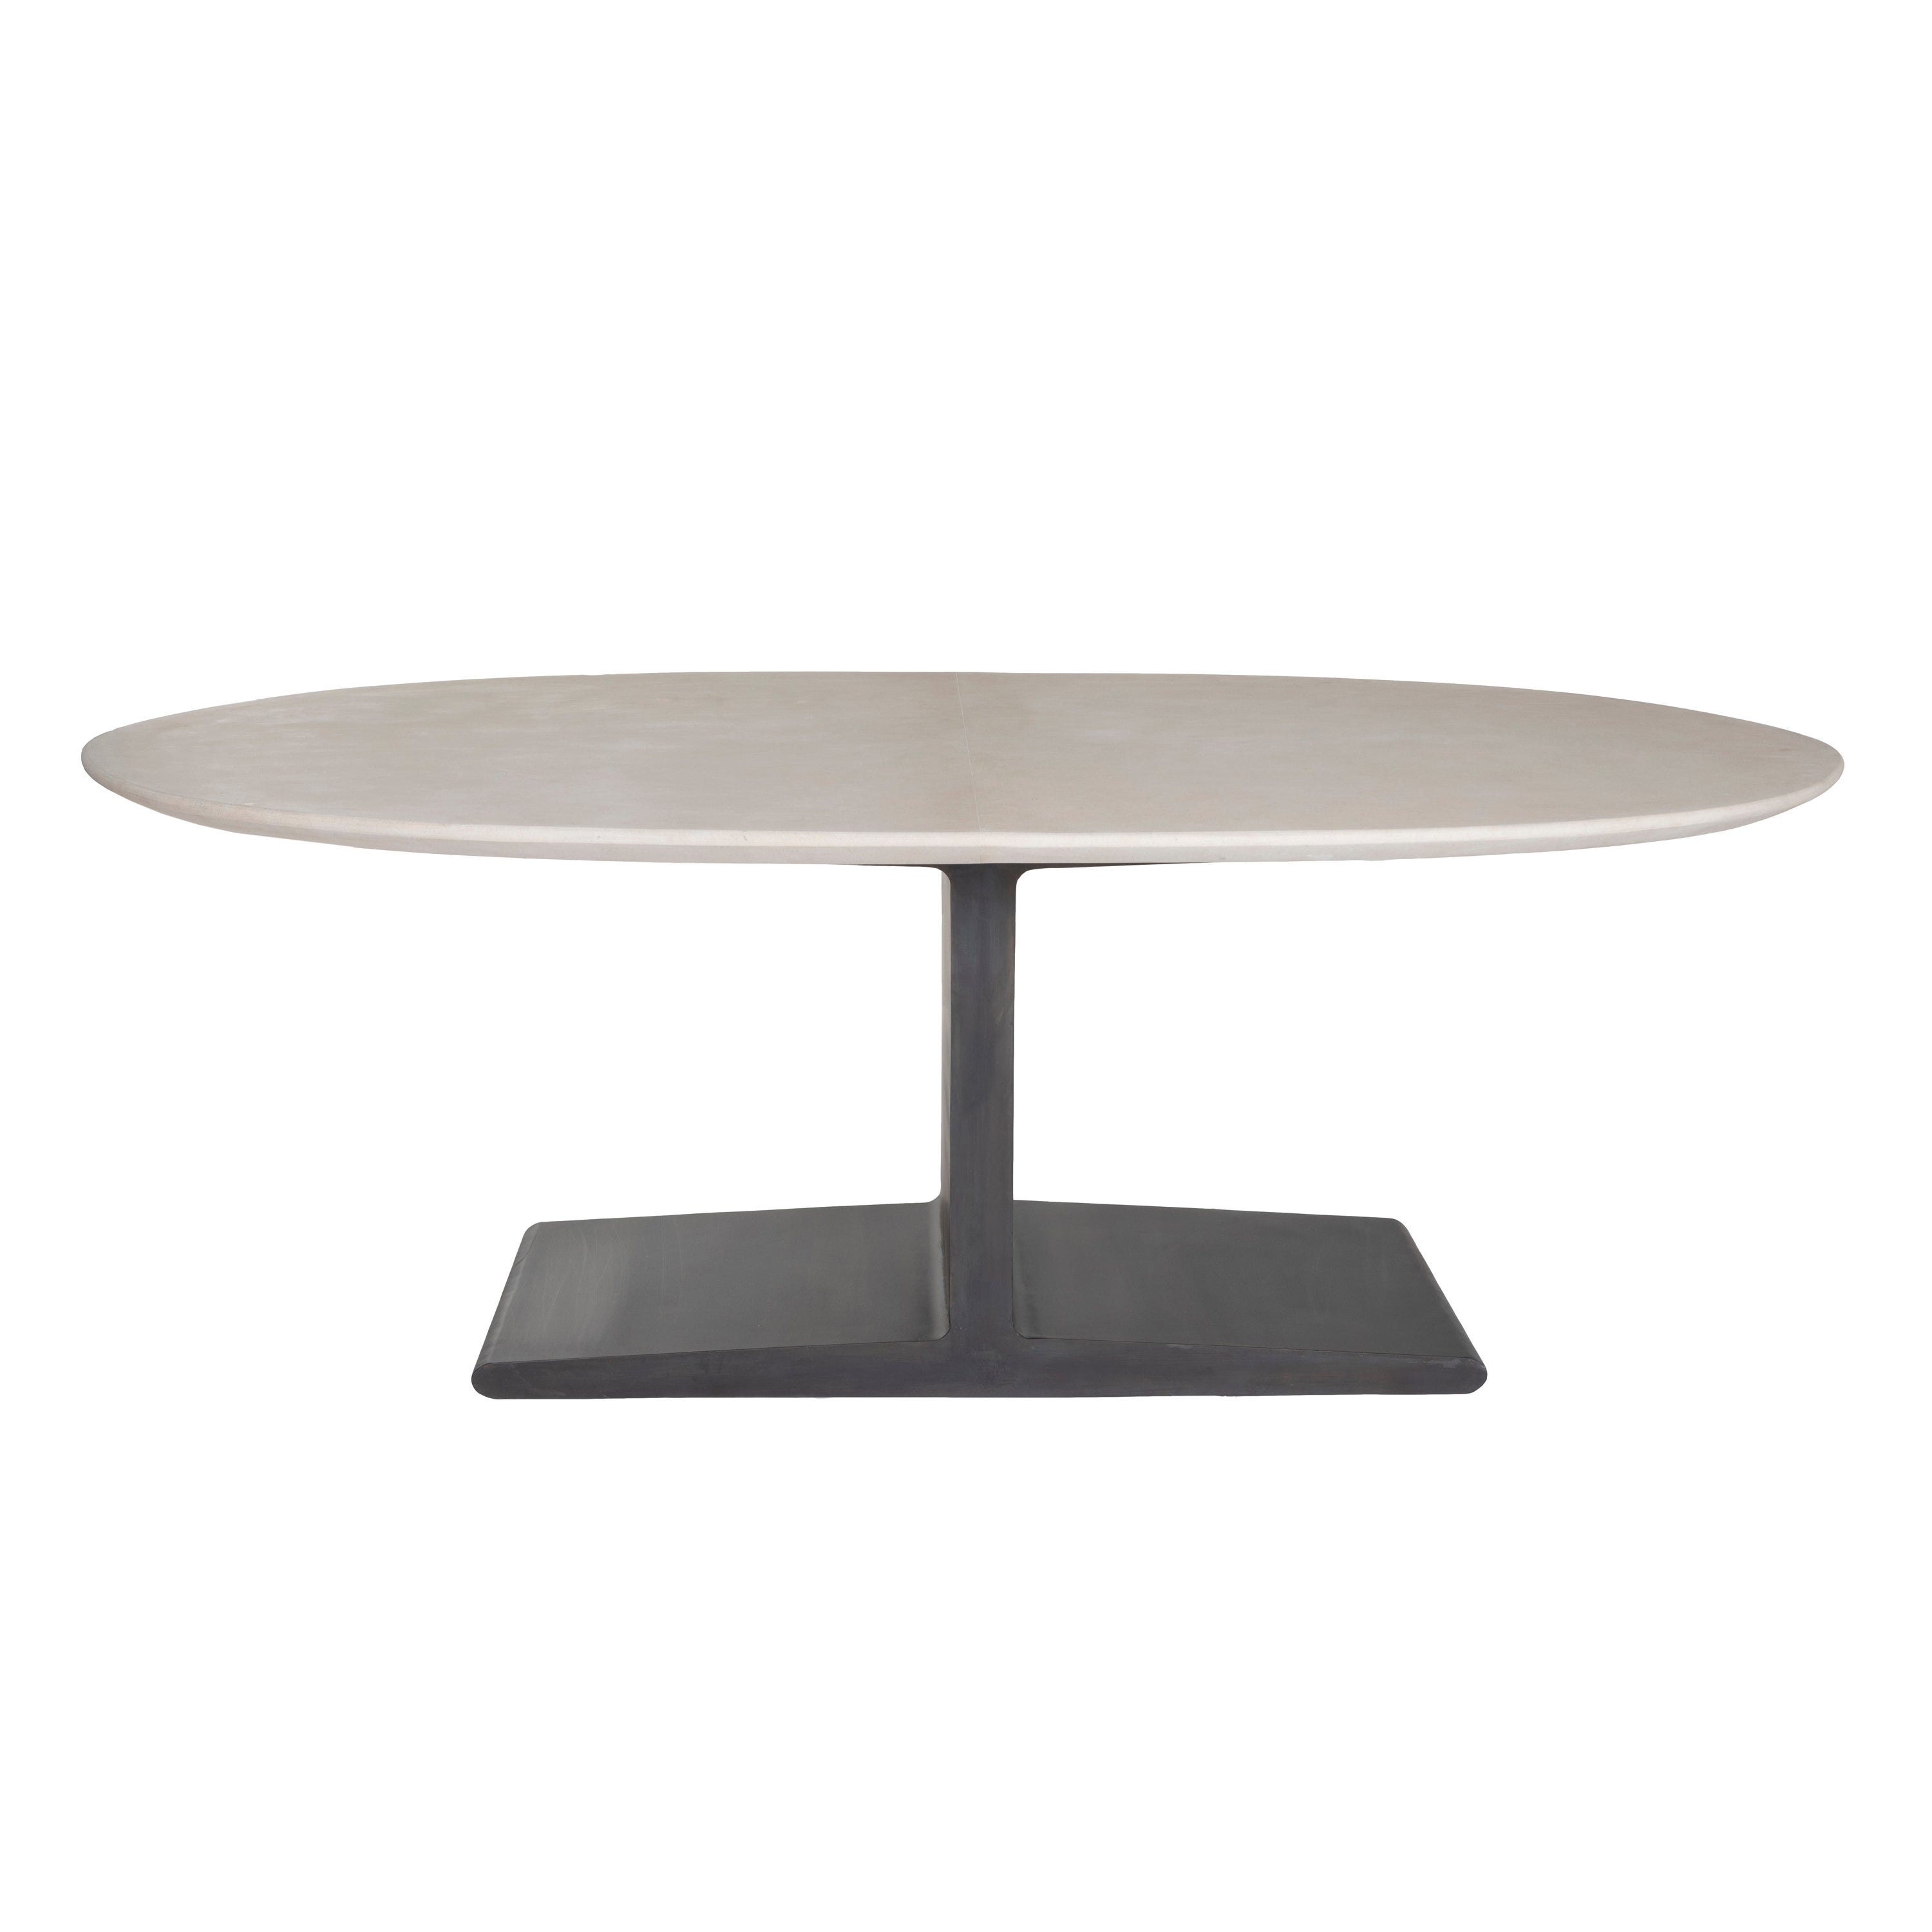 Oval Limestone Top Dining Table on Steel I Beam Base